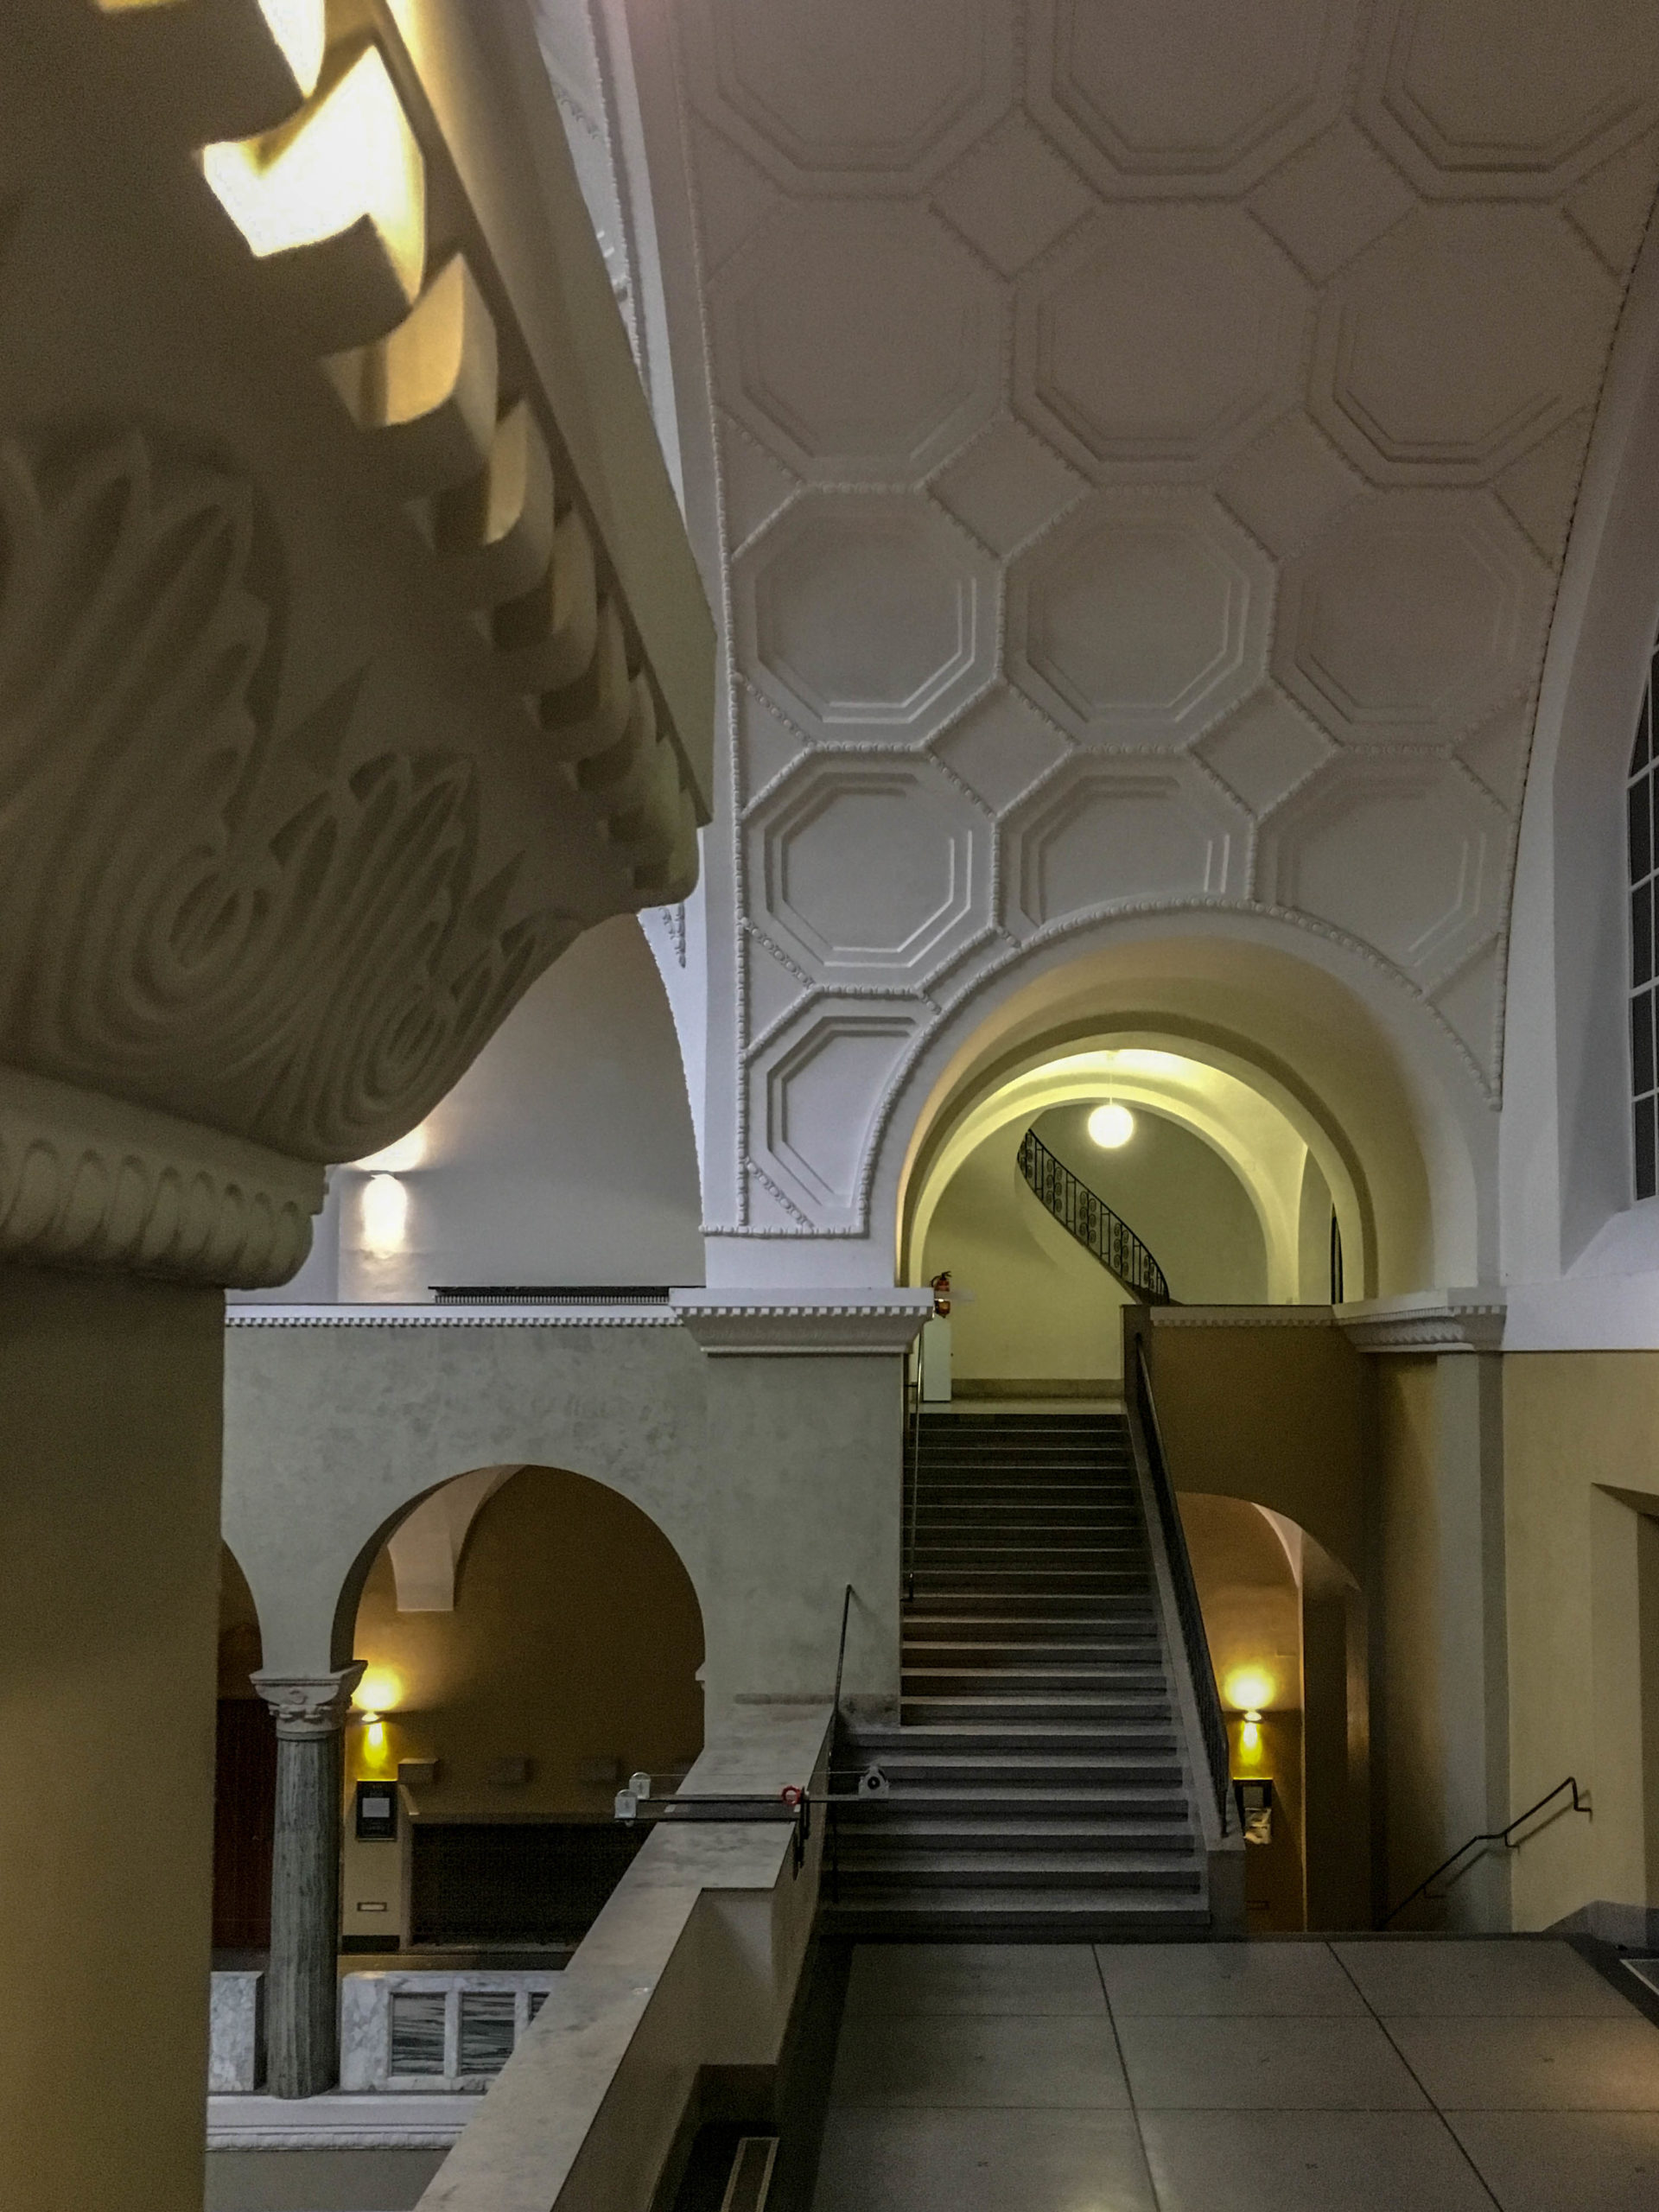 Extension Ludwig Maximilian University, 1906-1910. Architect: German Bestelmeyer